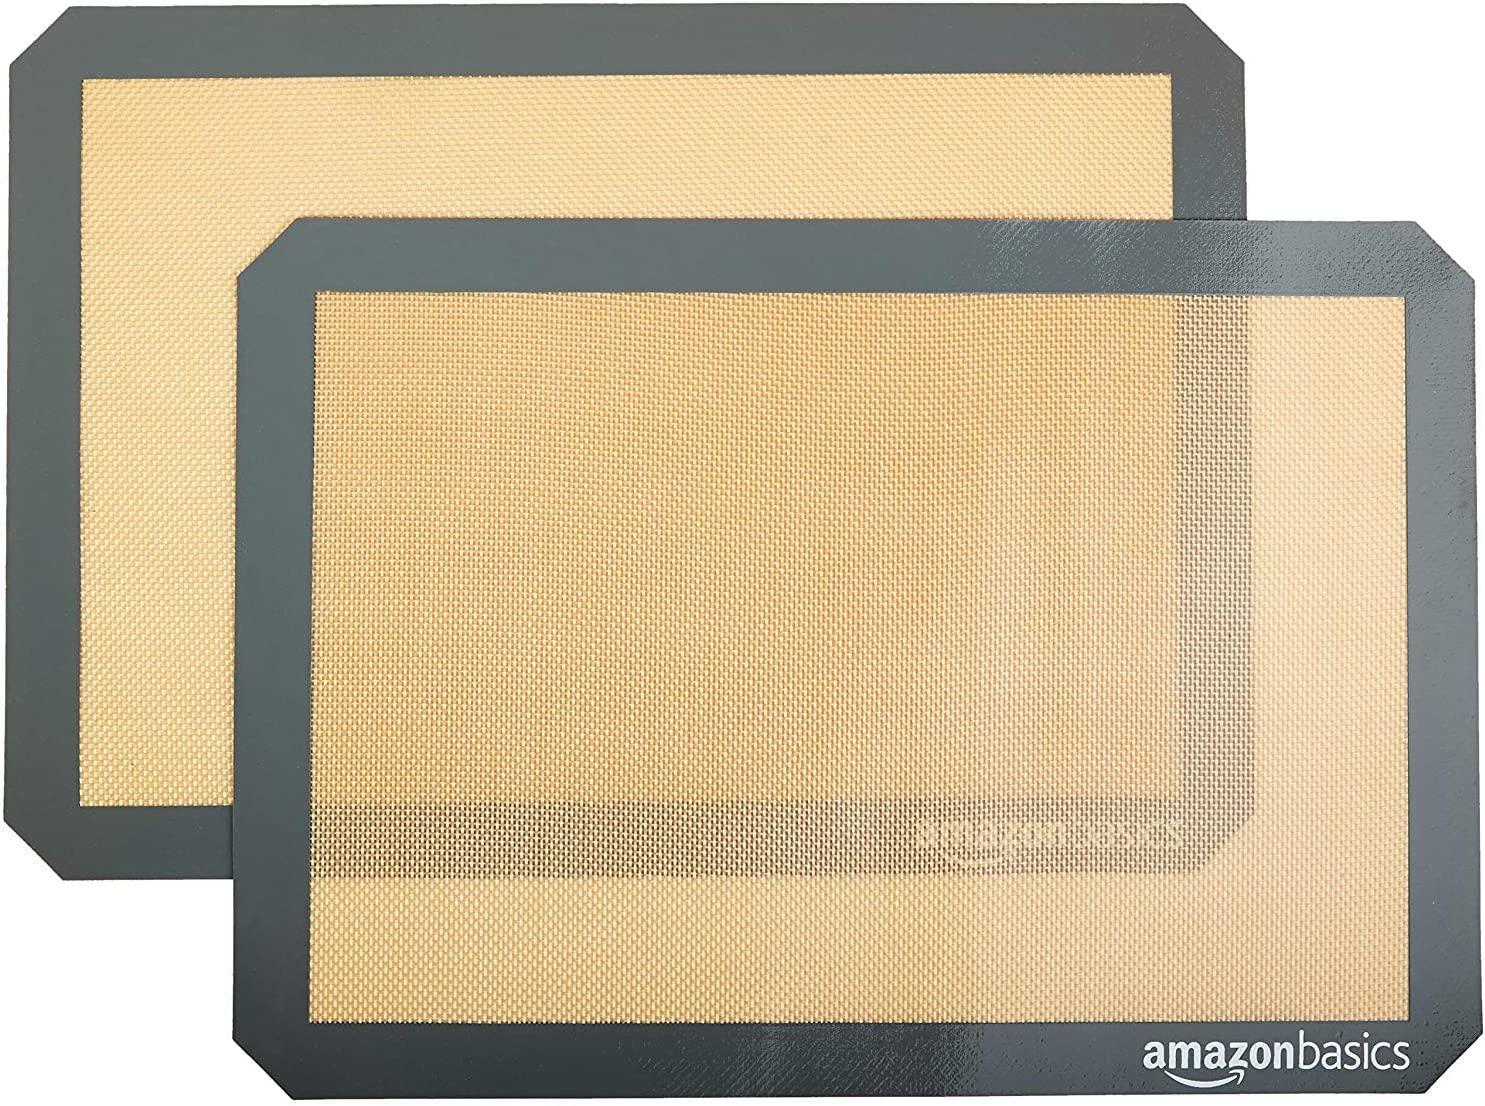 Amazon Basics Silicone Non-Stick Food Safe Baking Mat for $7.18